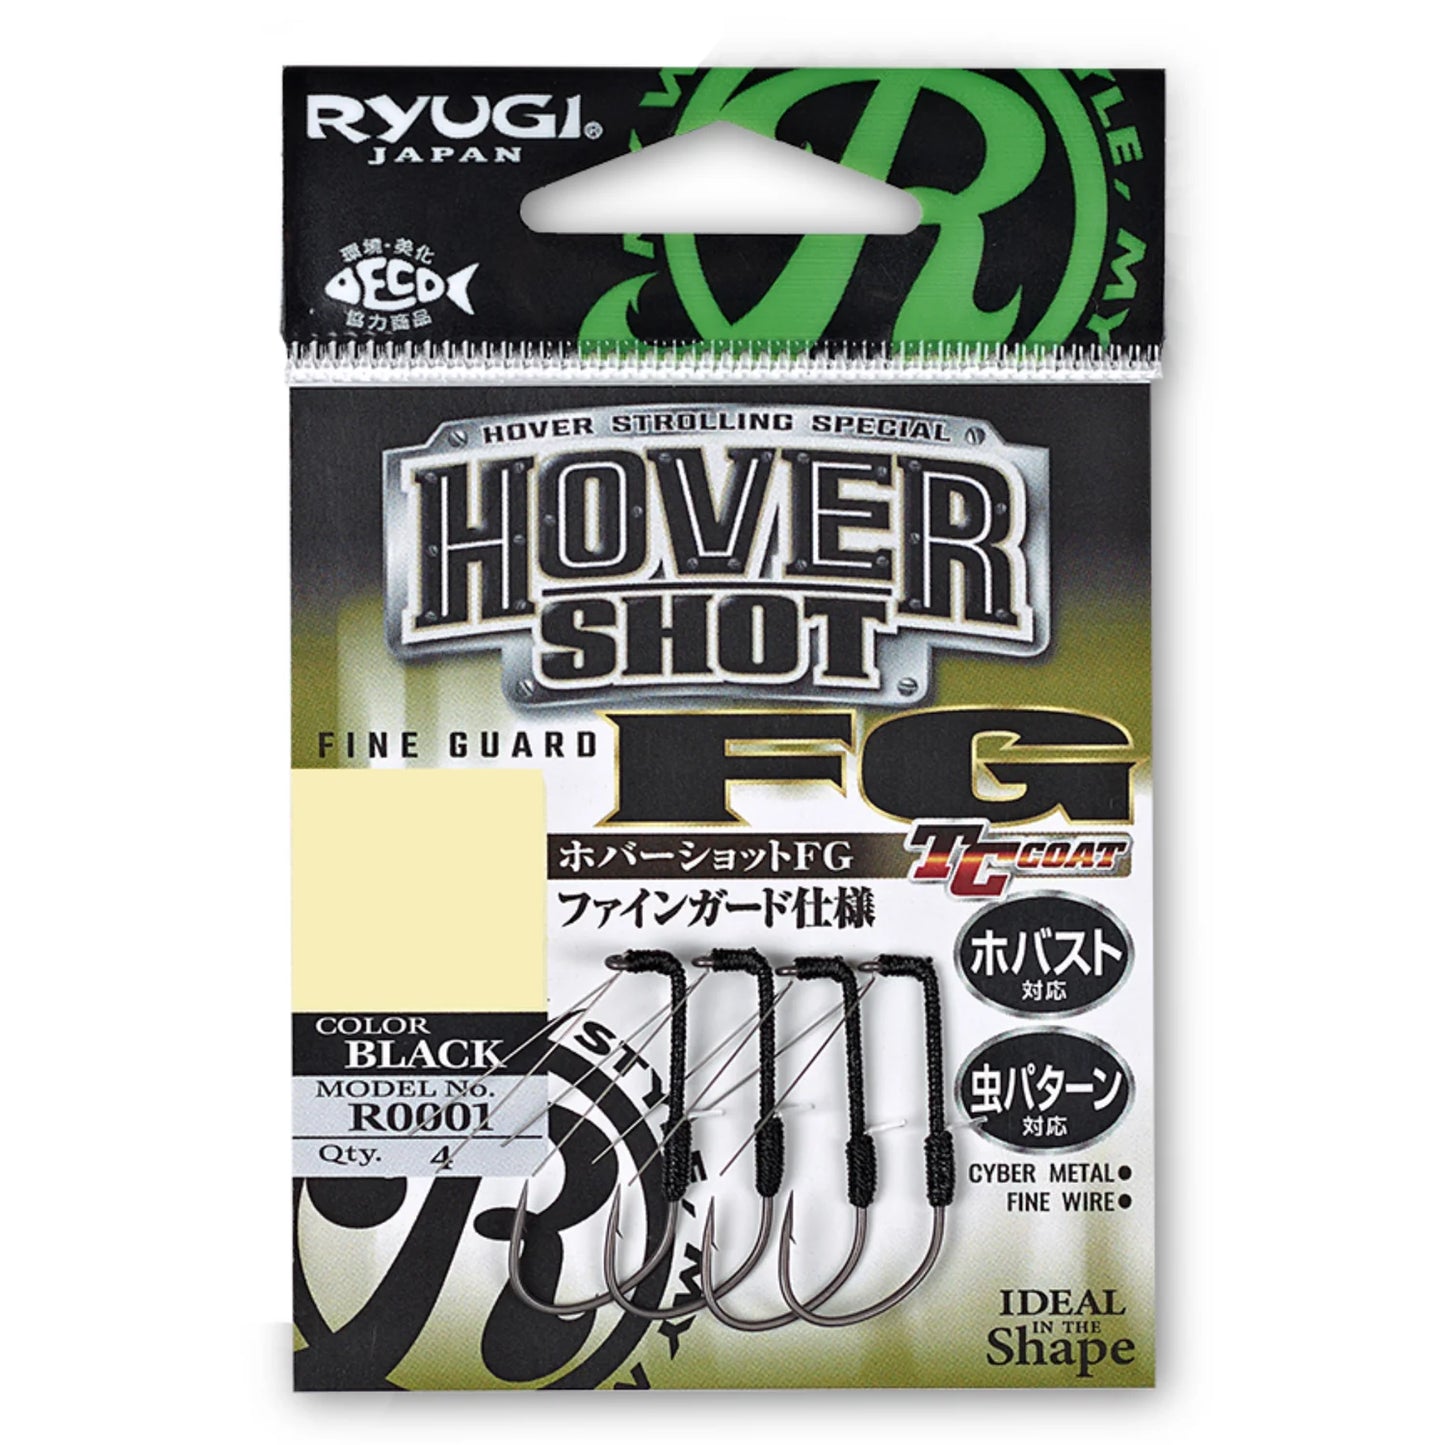 Ryugi Hover Shot